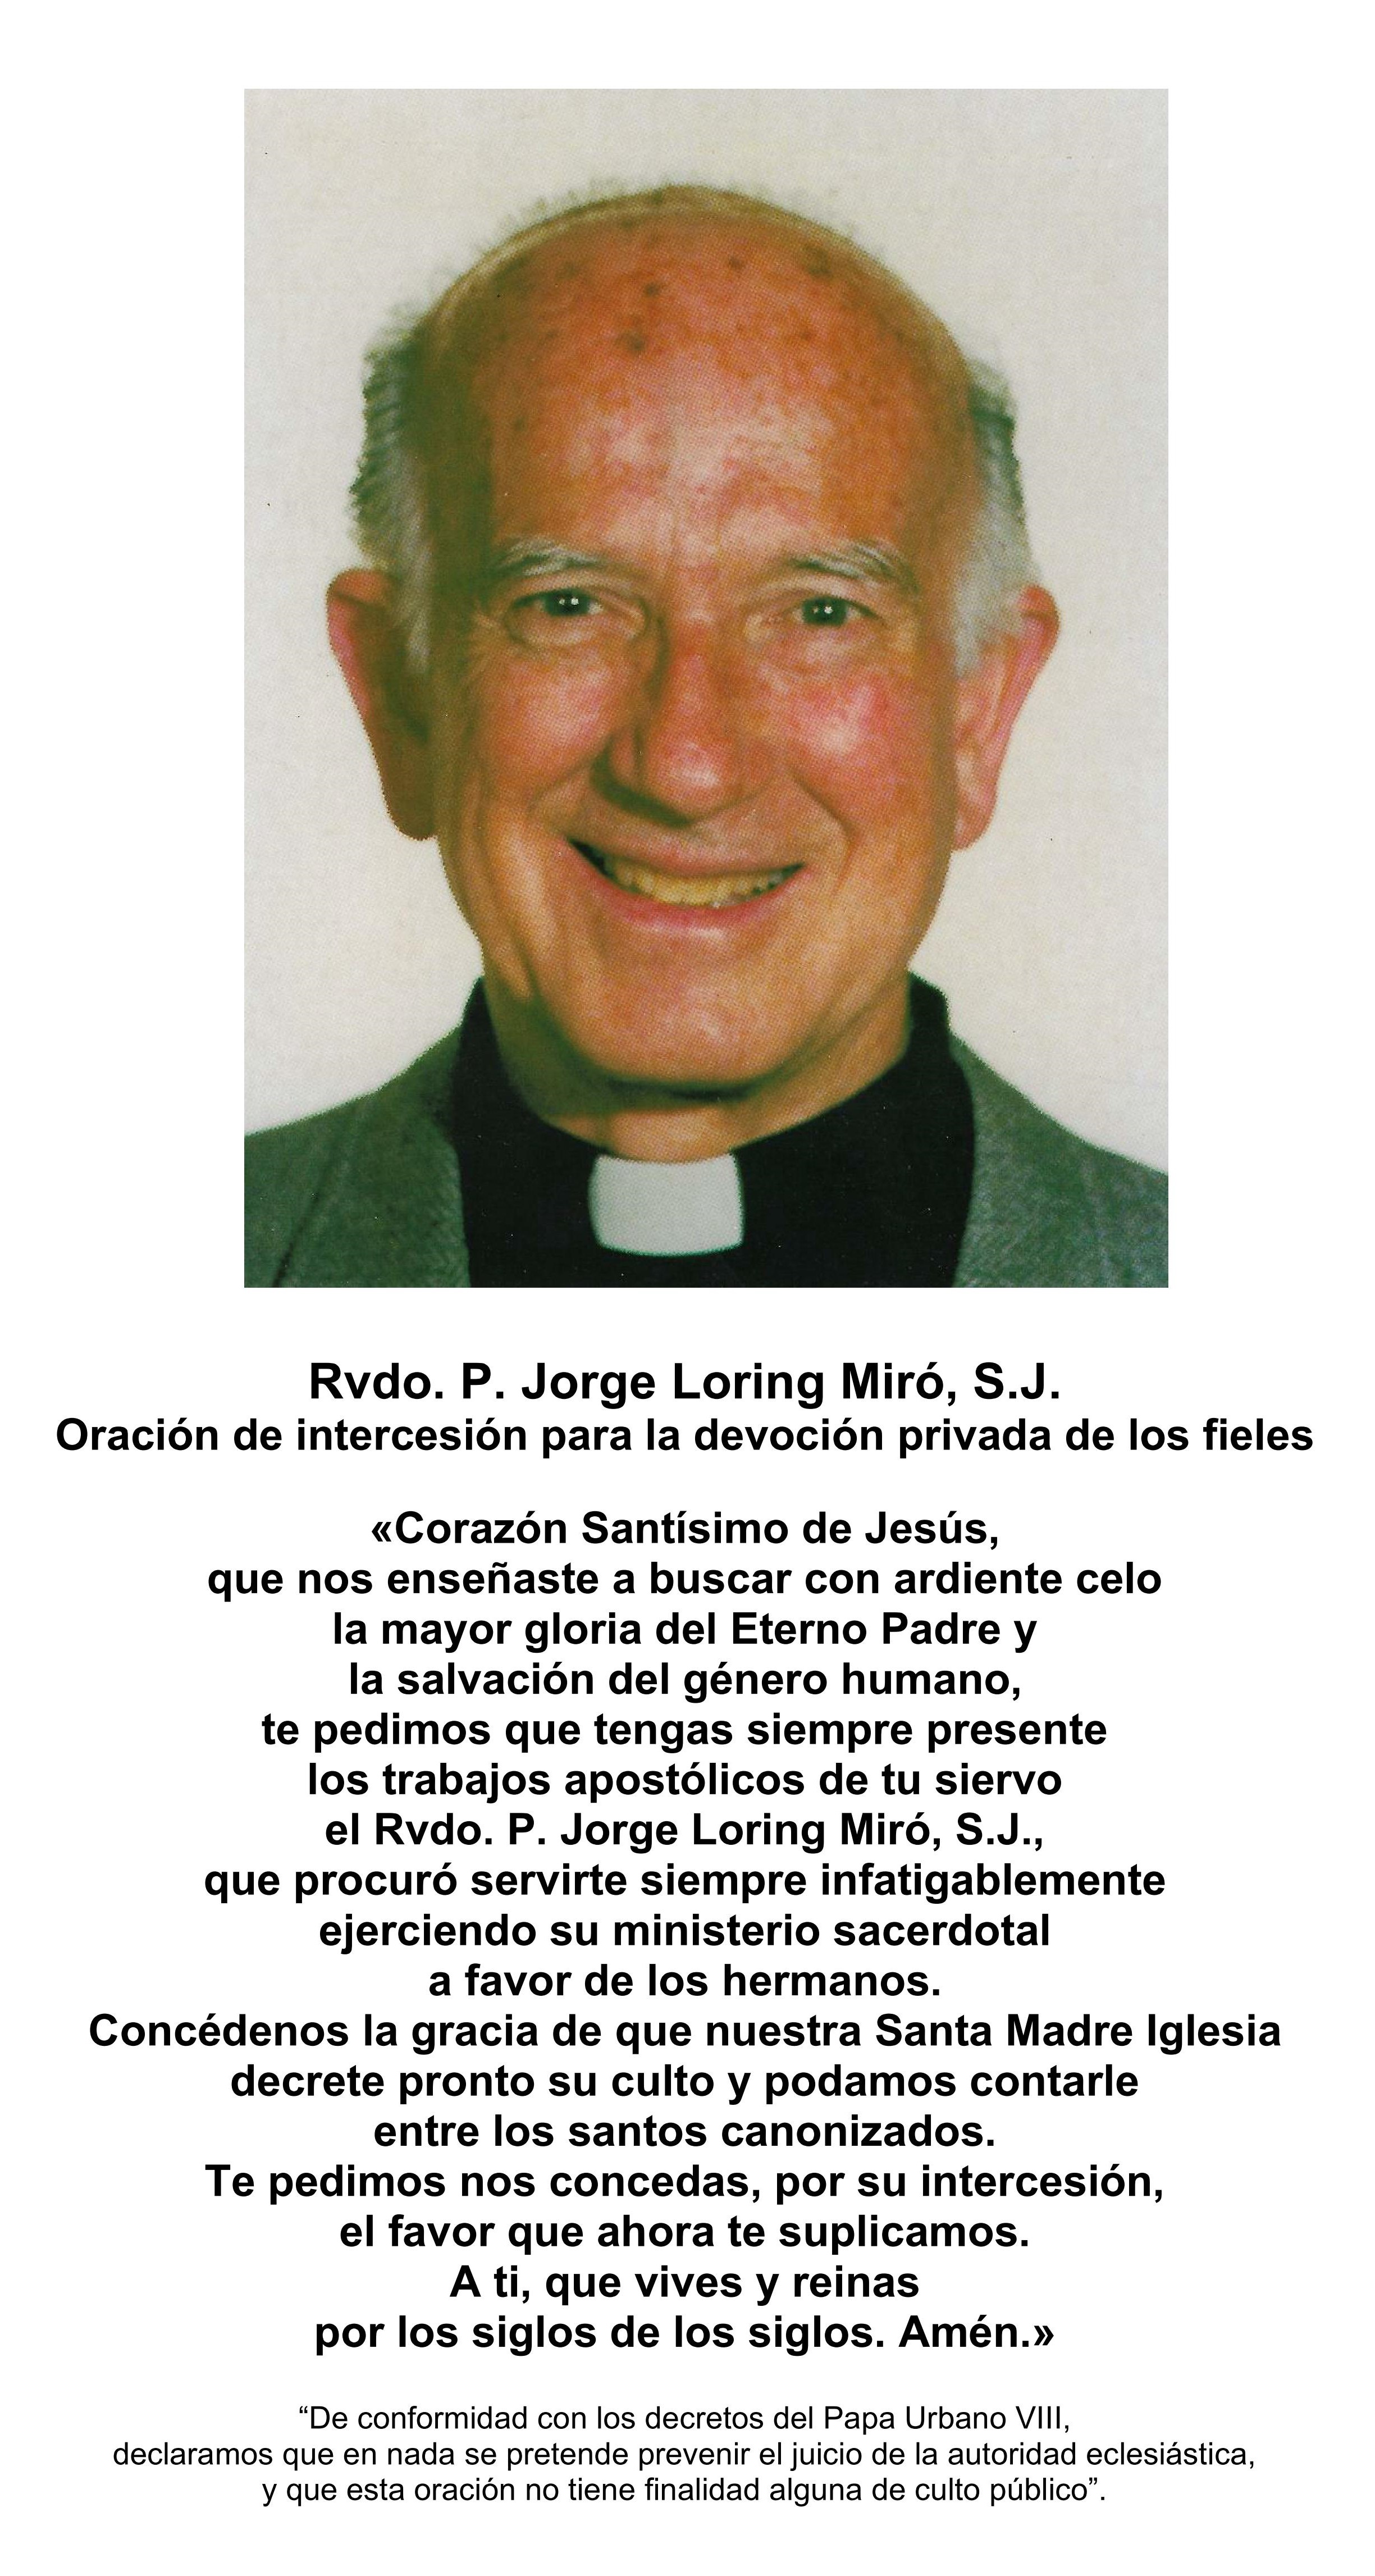 Oracion_intercesion_Padre_Jorge_Loring